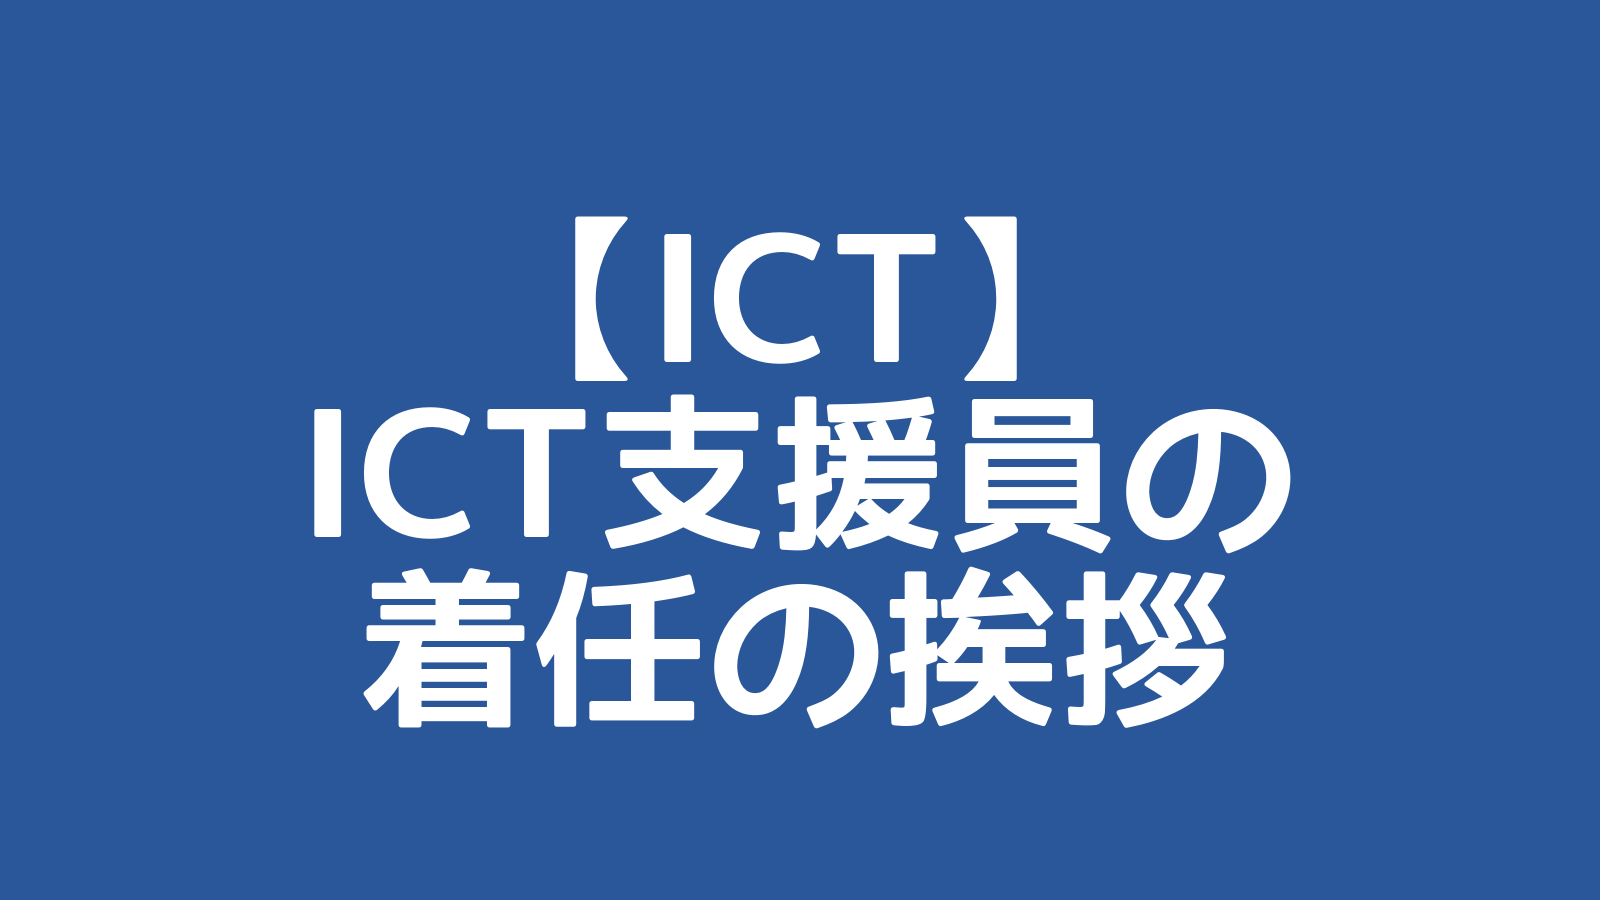 ICT支援員の着任の挨拶